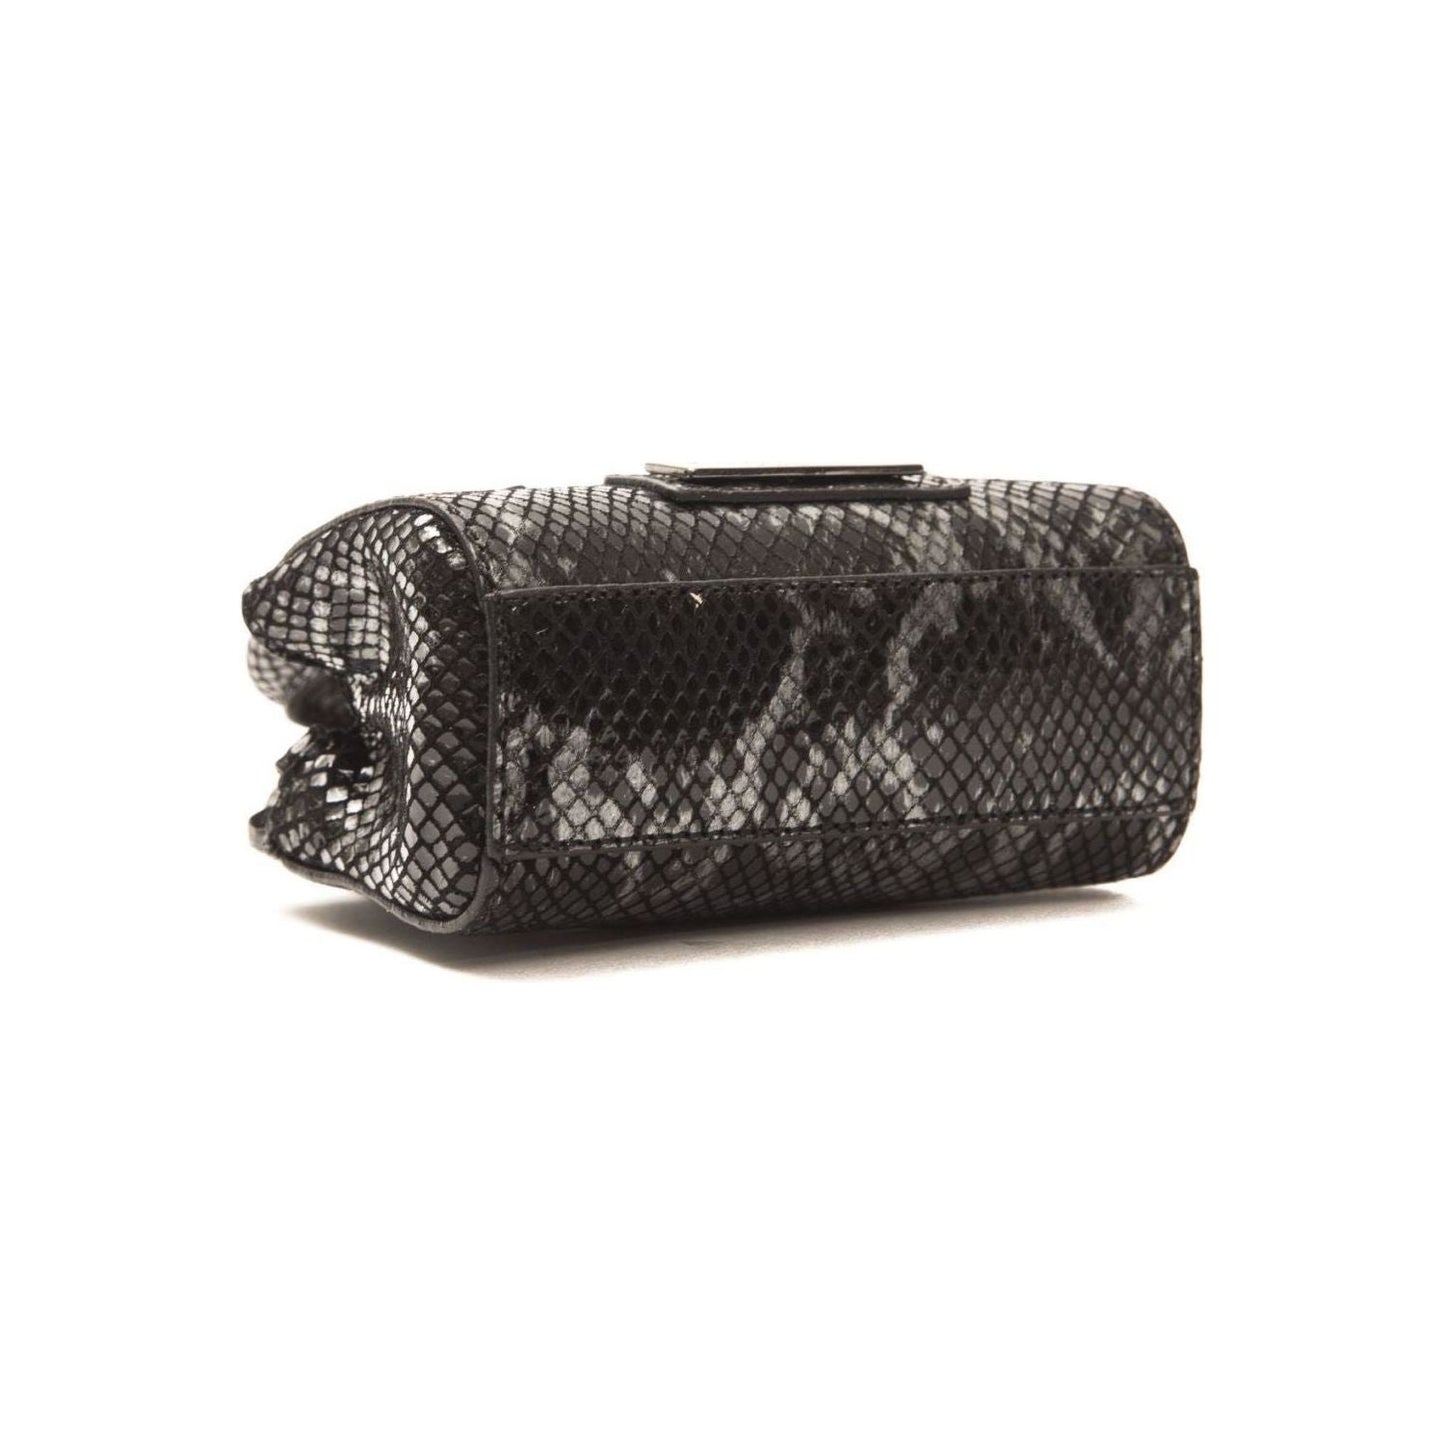 Pompei Donatella Chic Leather Mini Tote with Python Print gray-leather-mini-handbag